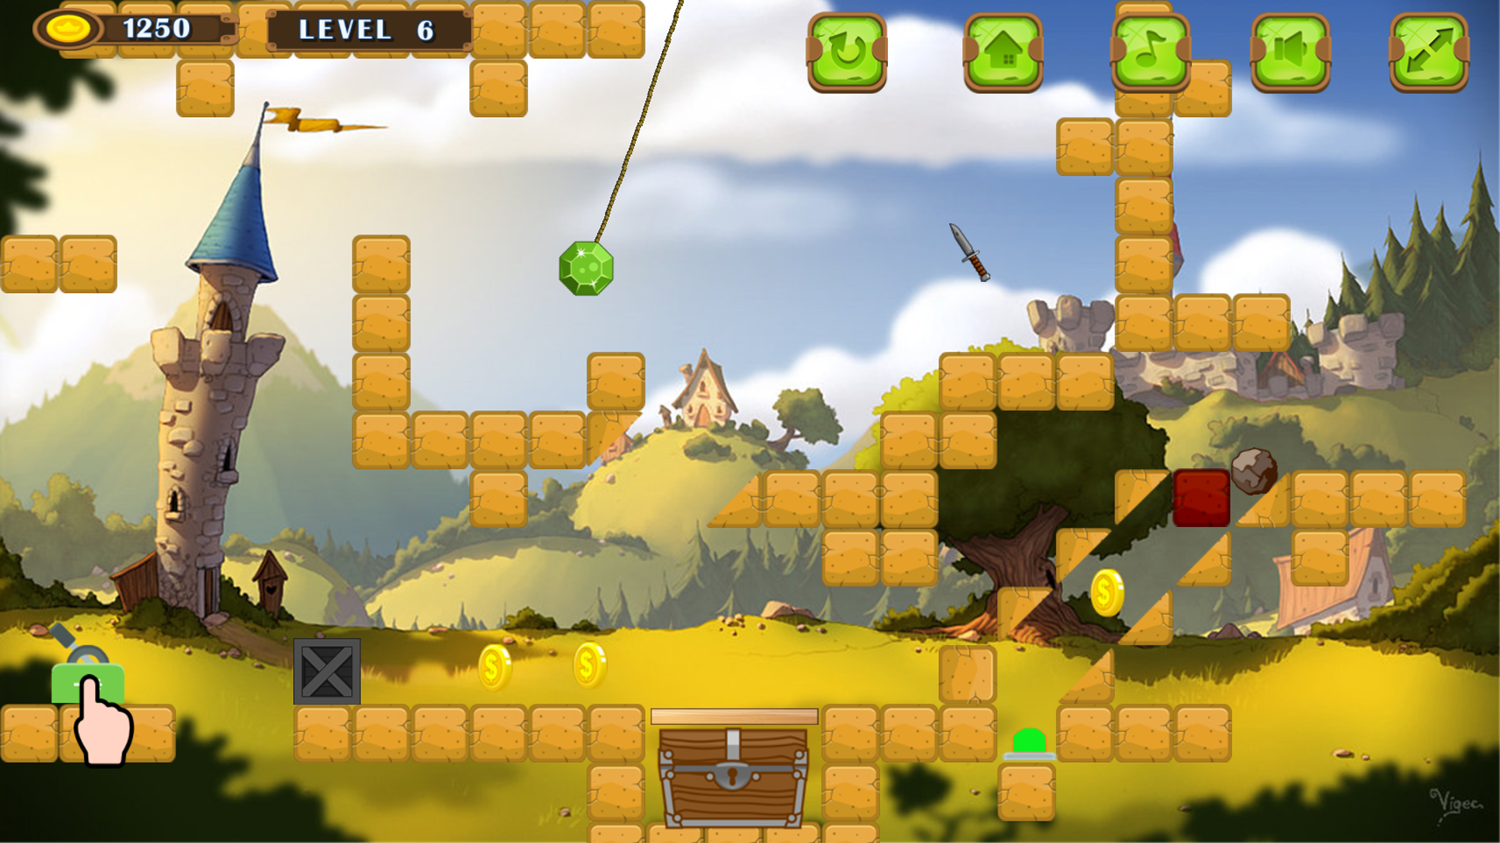 Green Diamond Game Level Progress Screenshot.